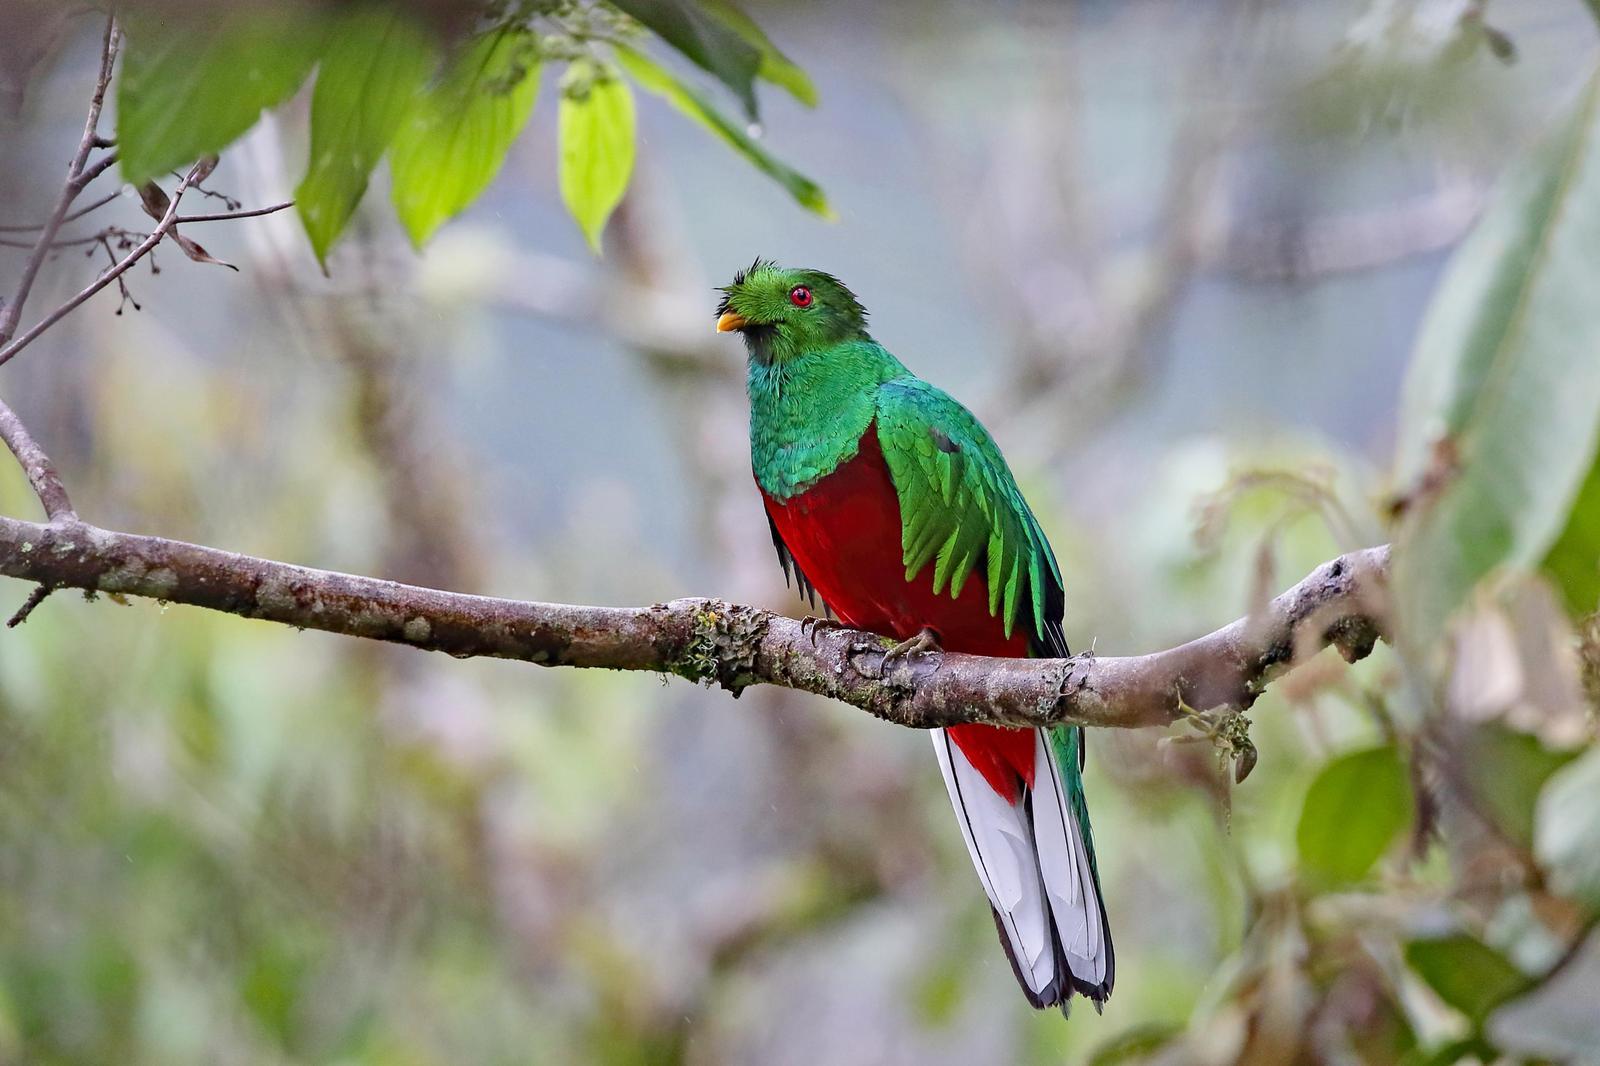 Crested Quetzal Photo by William Supulski